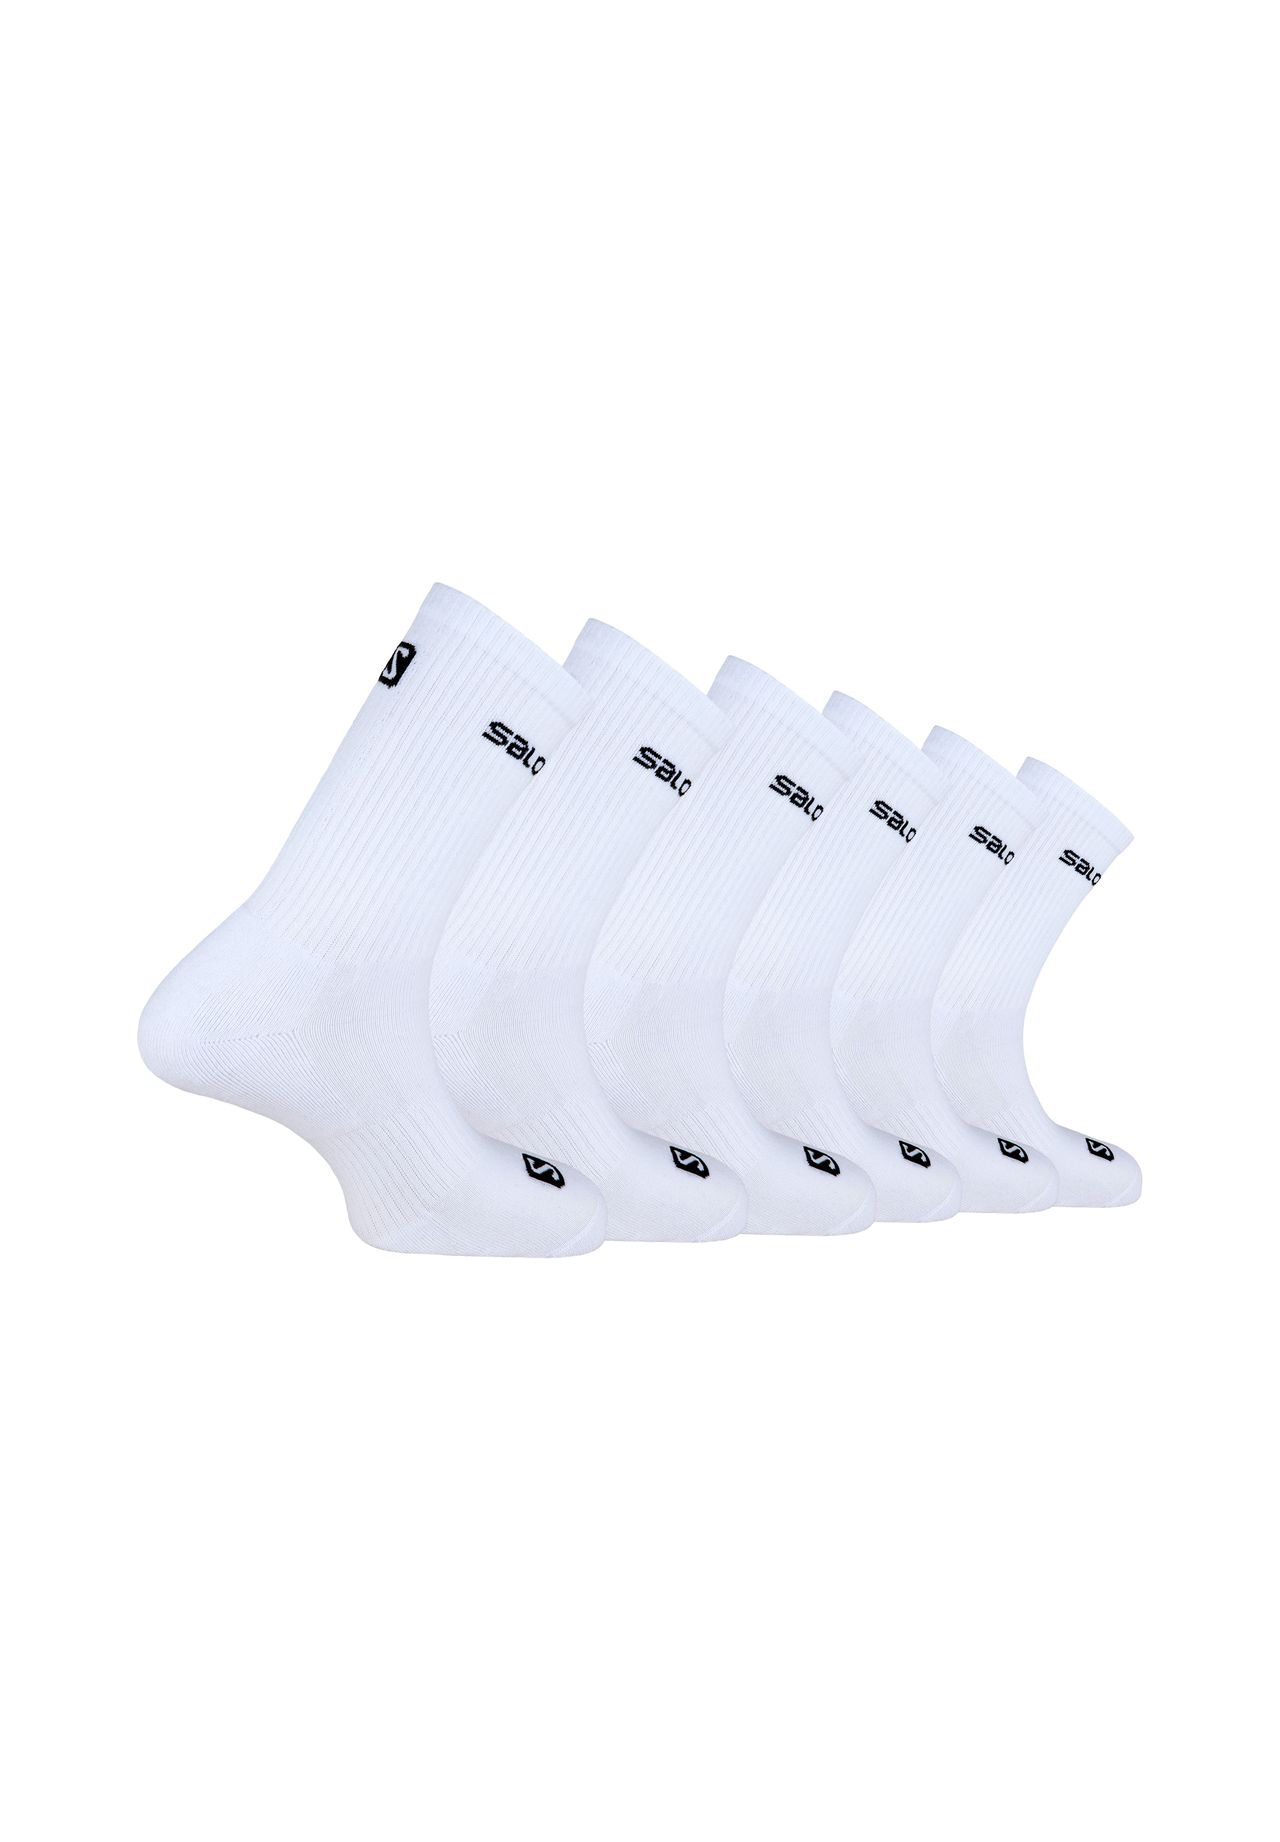 salomon Sport-Socken 6er-Pack casual ACTIVE mit gepolsterter Sohle | GALERIA